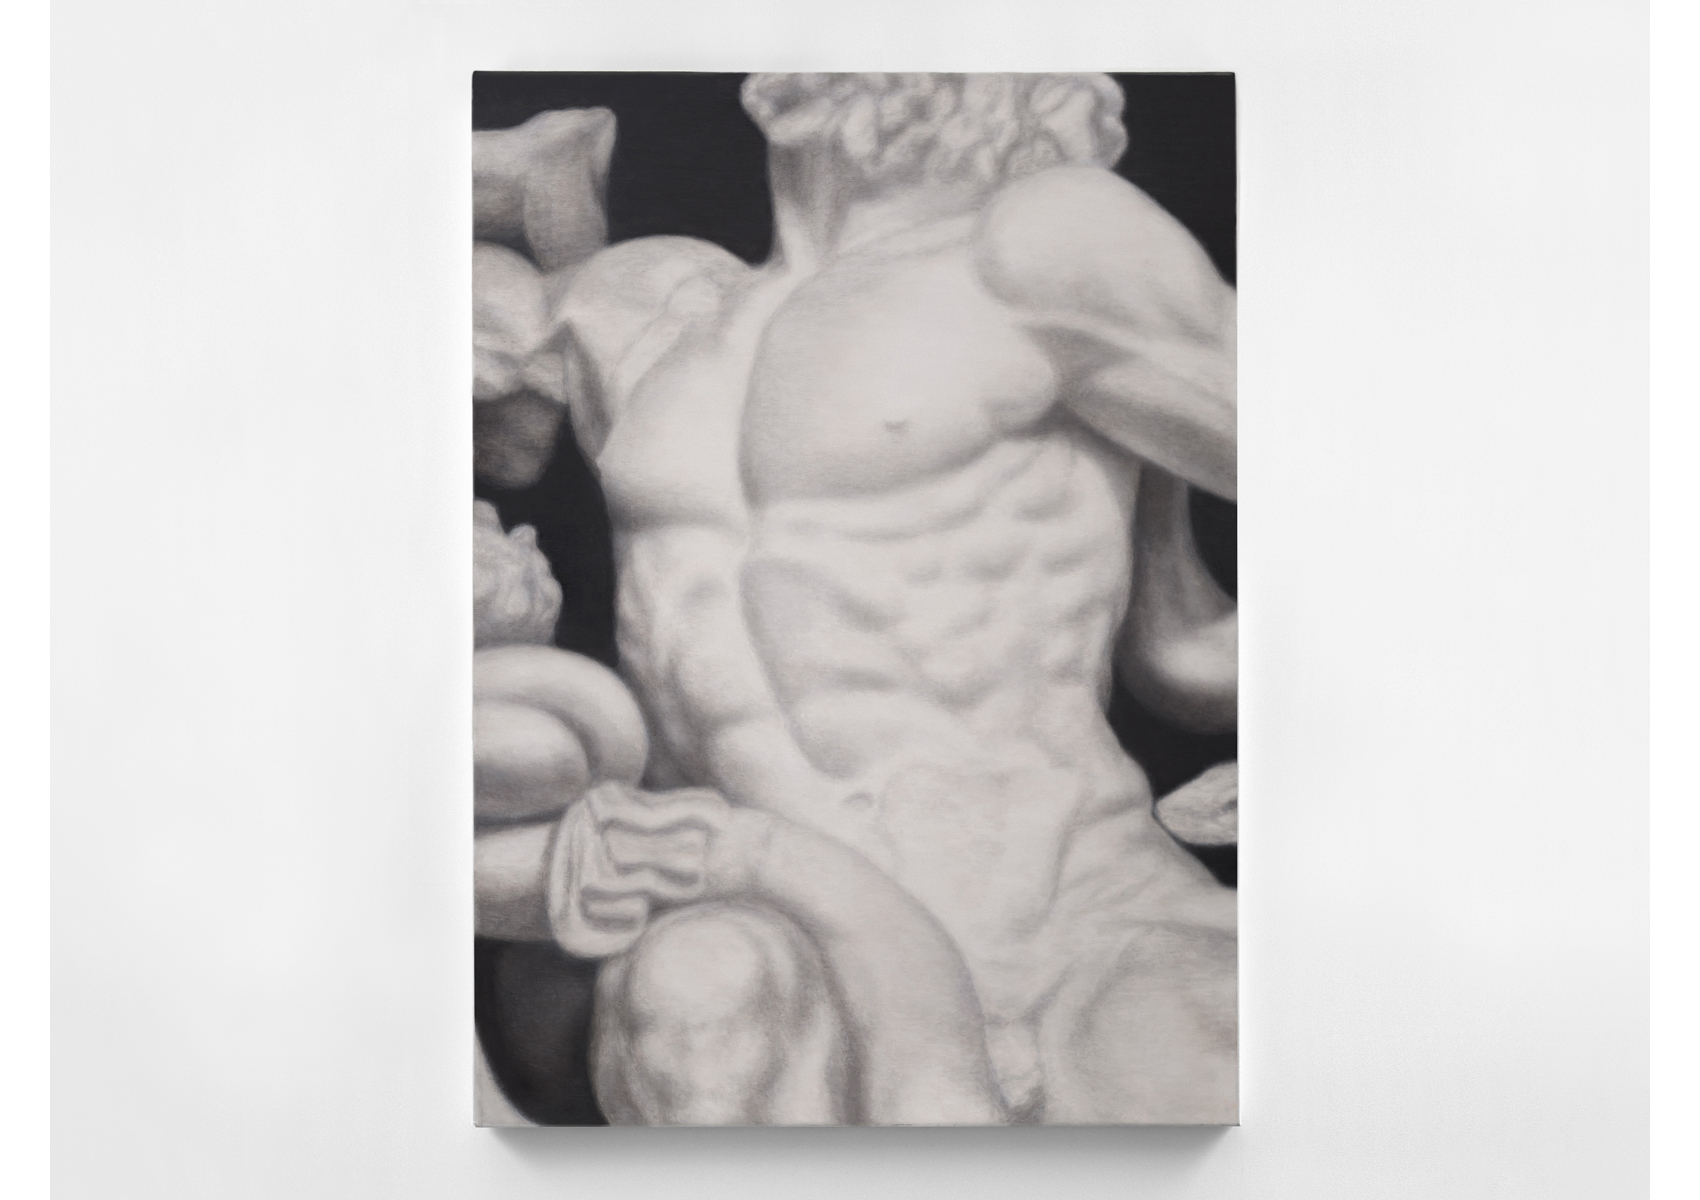 MONUMENT / Marble / 2014 / 12O x 168 x 4 cm / oil on canvas